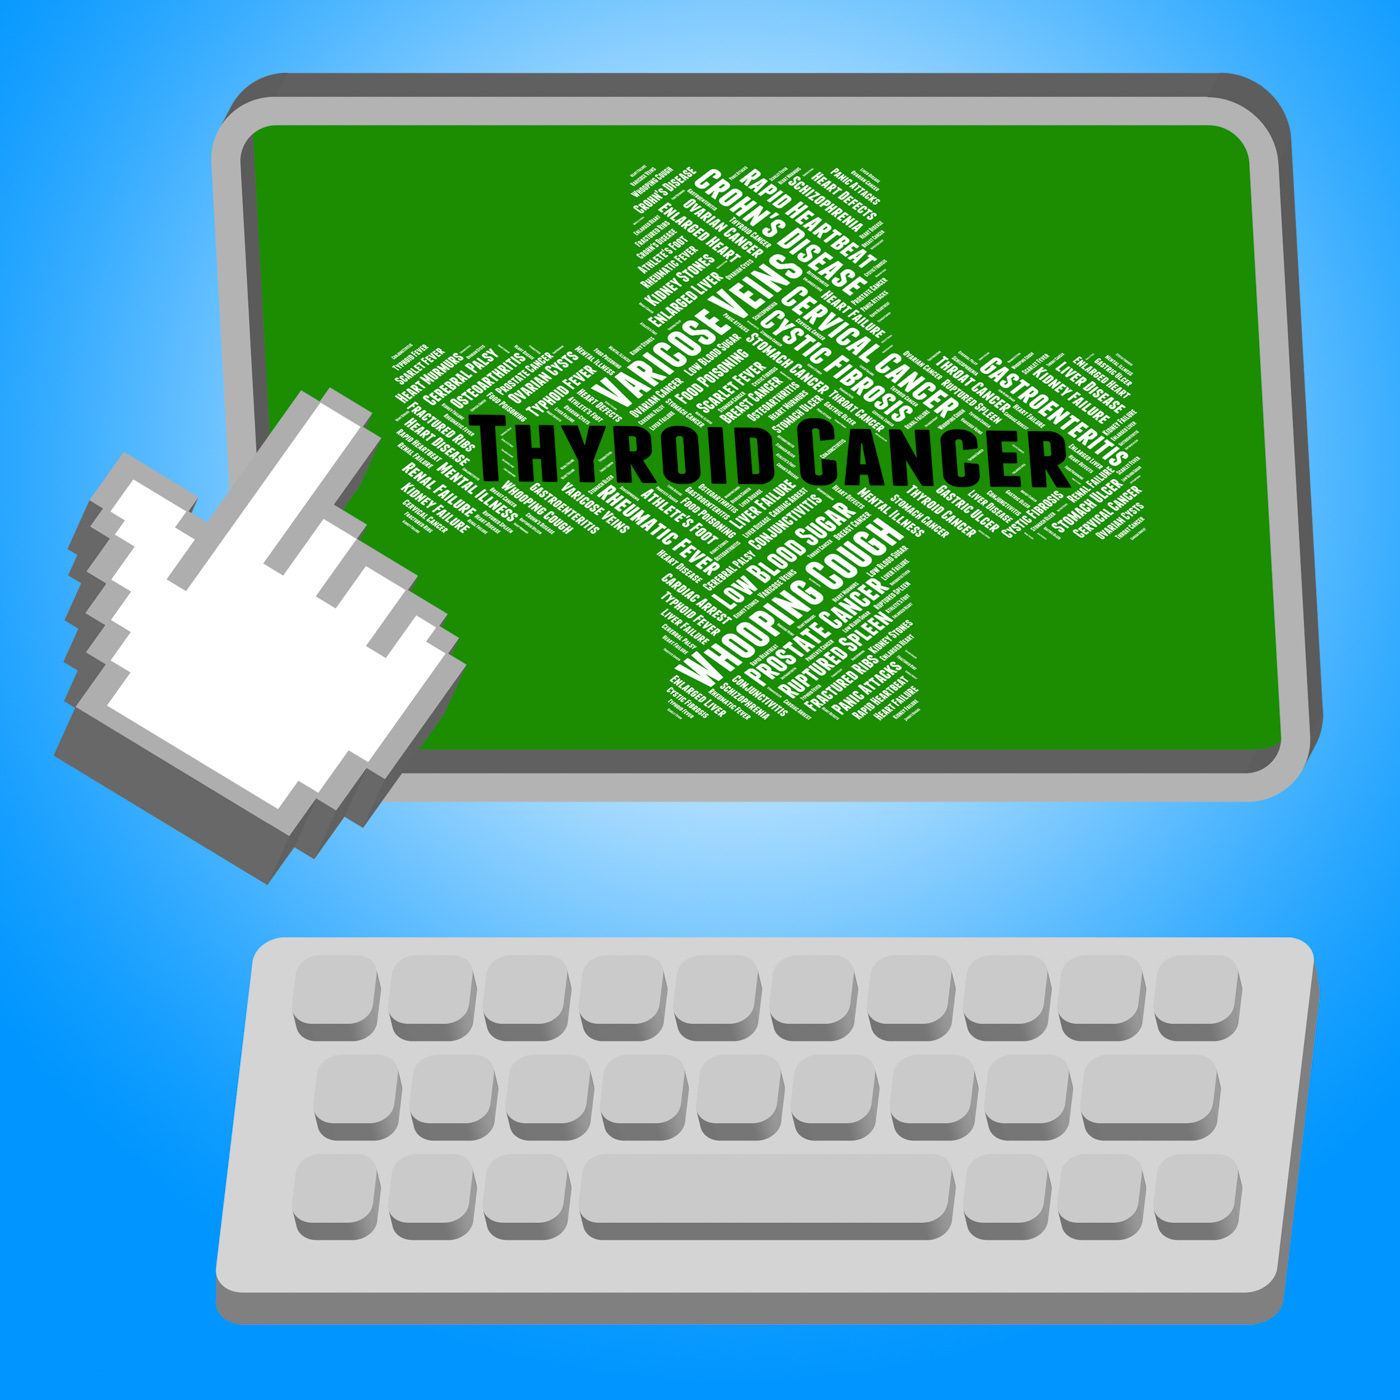 Thyroid cancer means cancerous growth and ailments photo